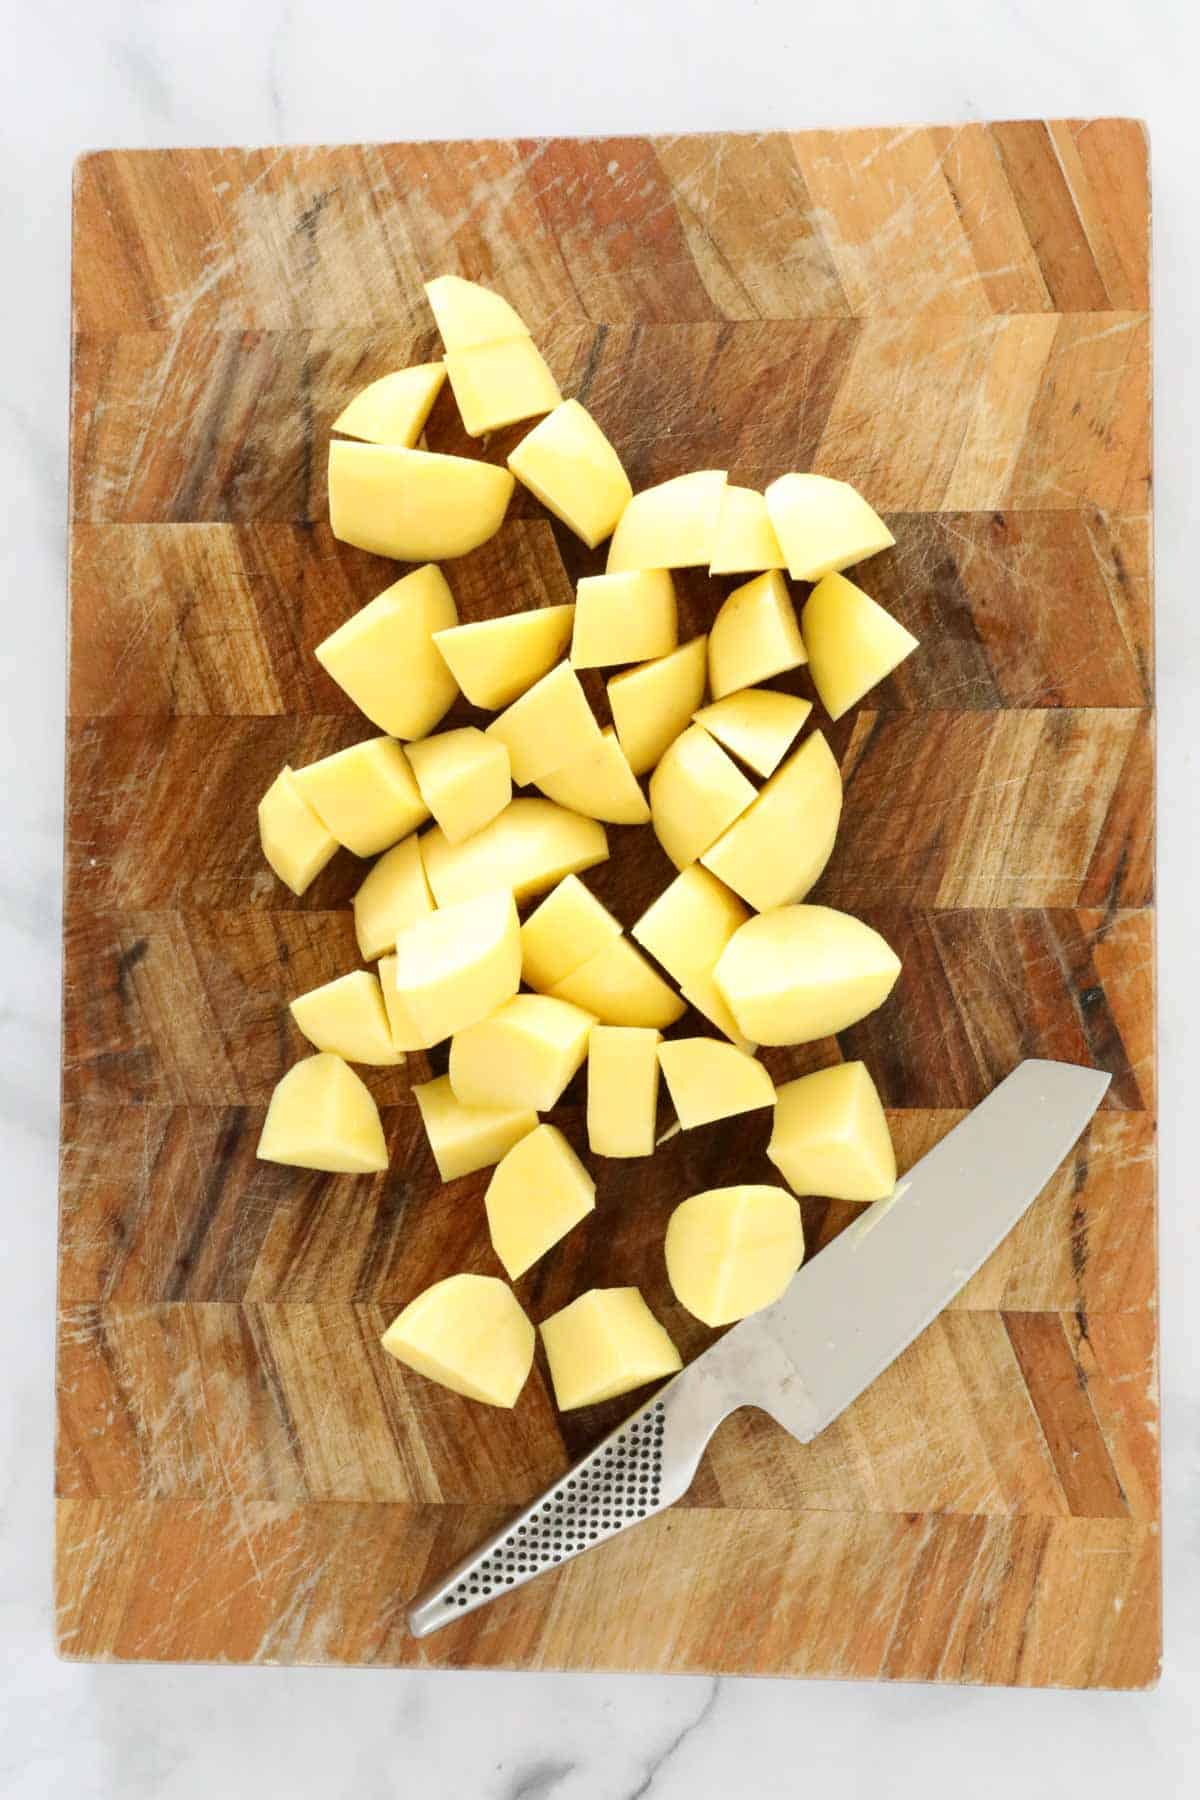 Peeled and chopped potatoes on a chopping board.